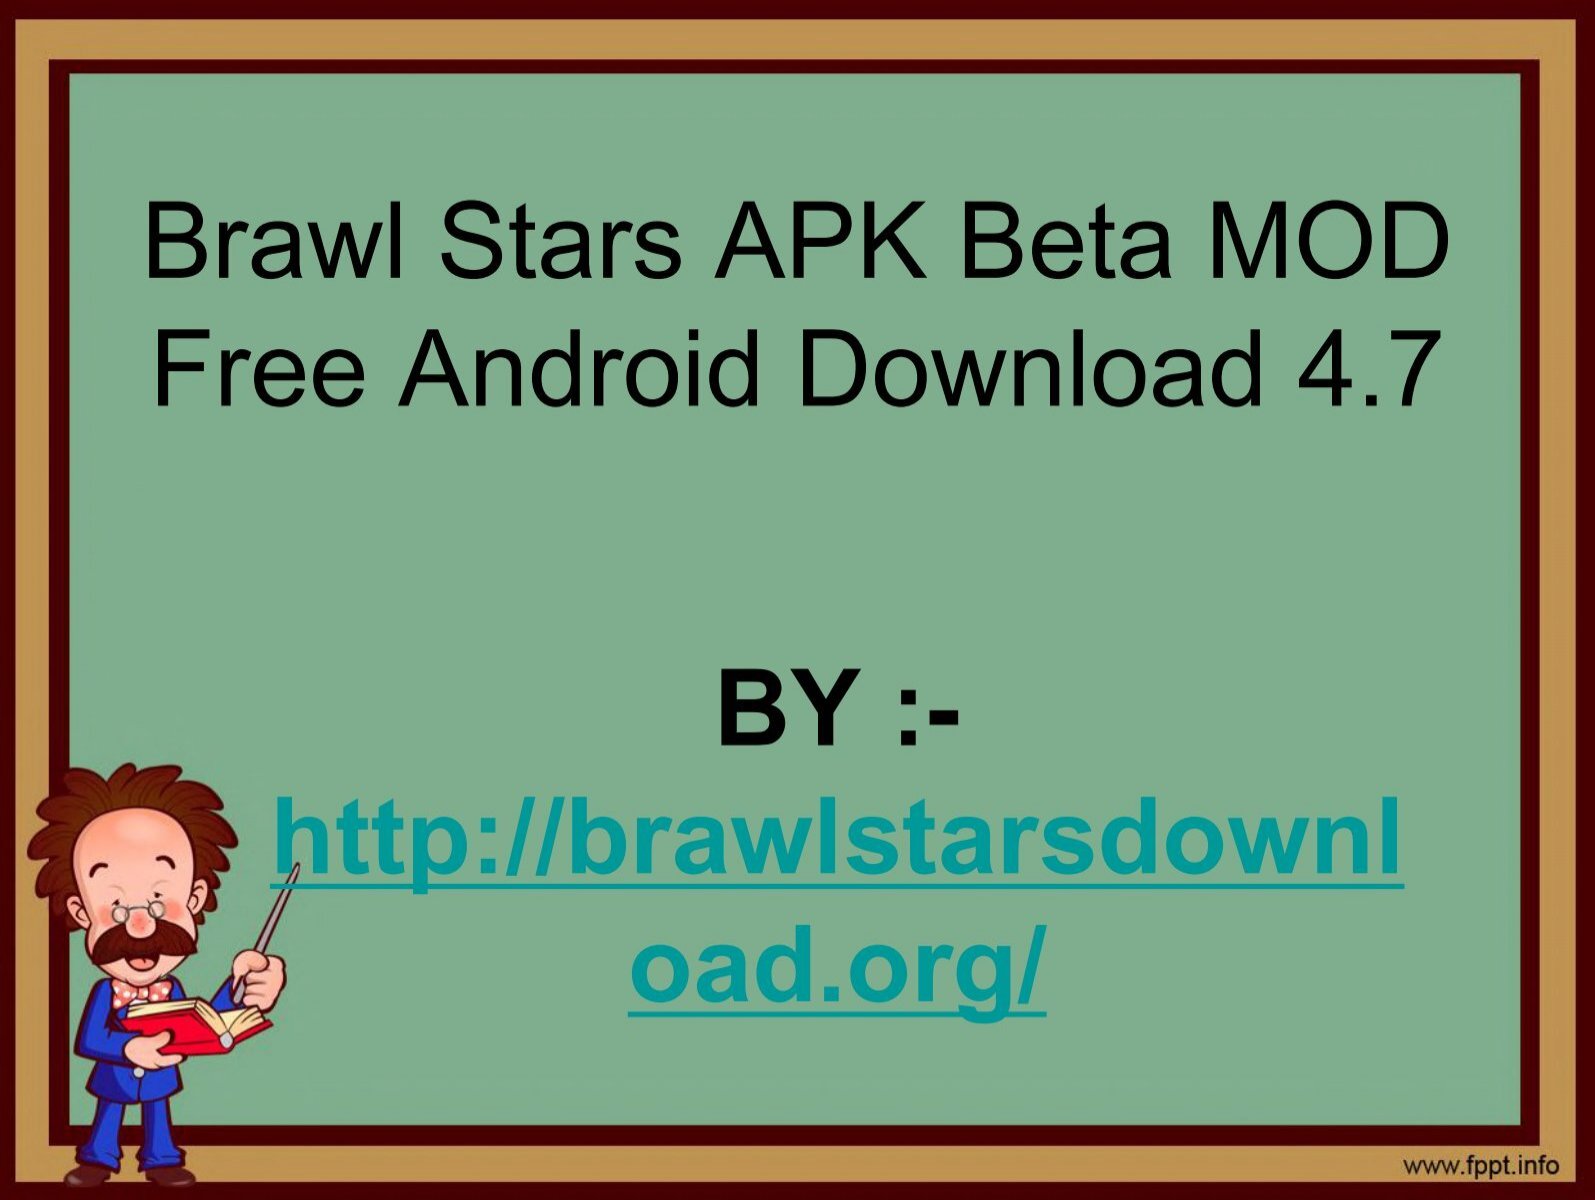 Brawl Stars Apk Beta Mod - infinite free gems brawl stars